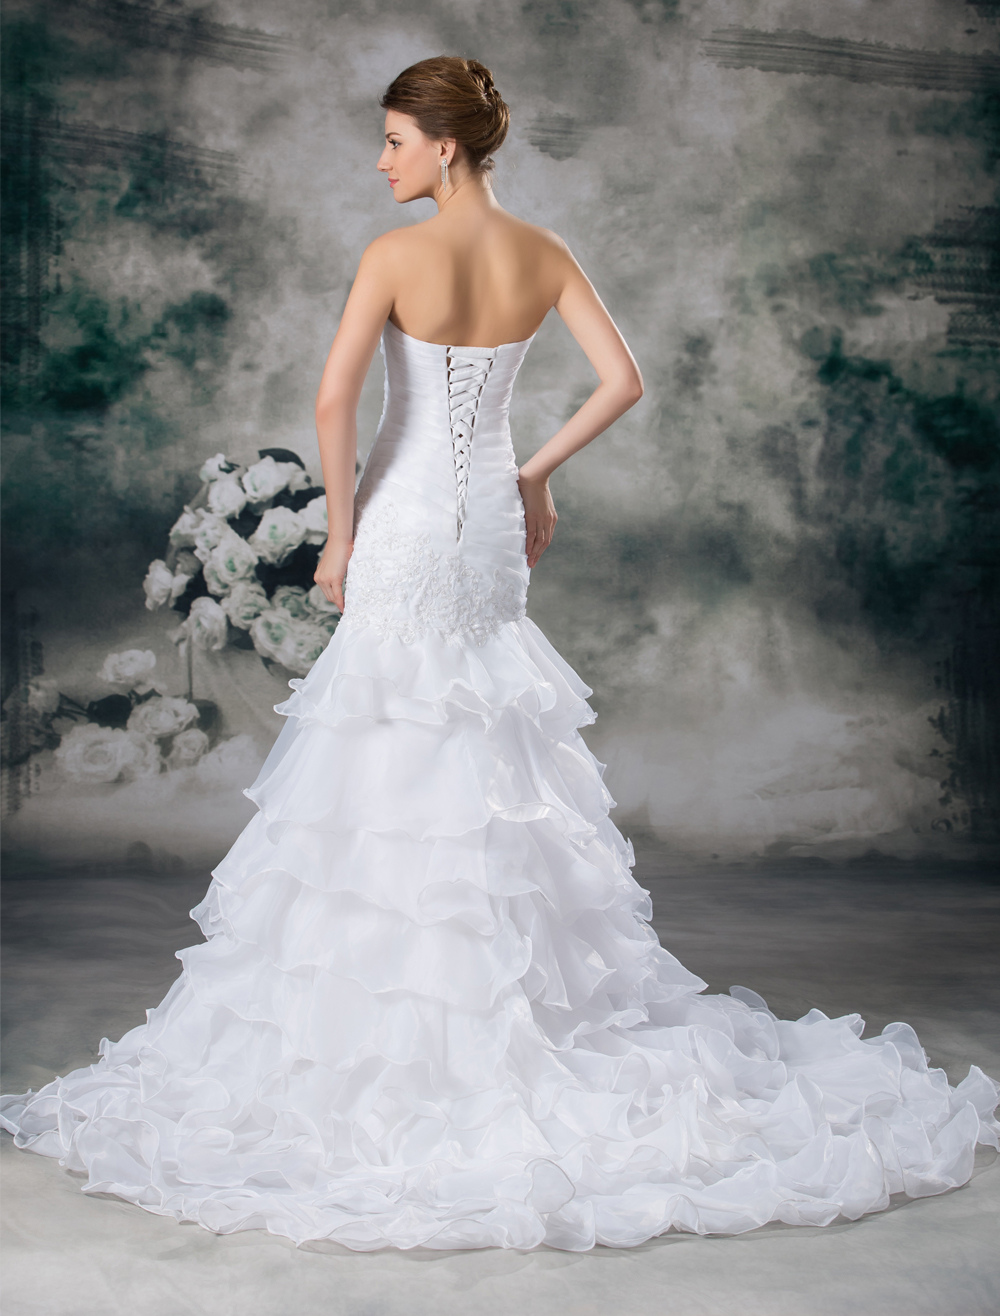 White Mermaid Strapless Bride's Wedding Dress - Milanoo.com